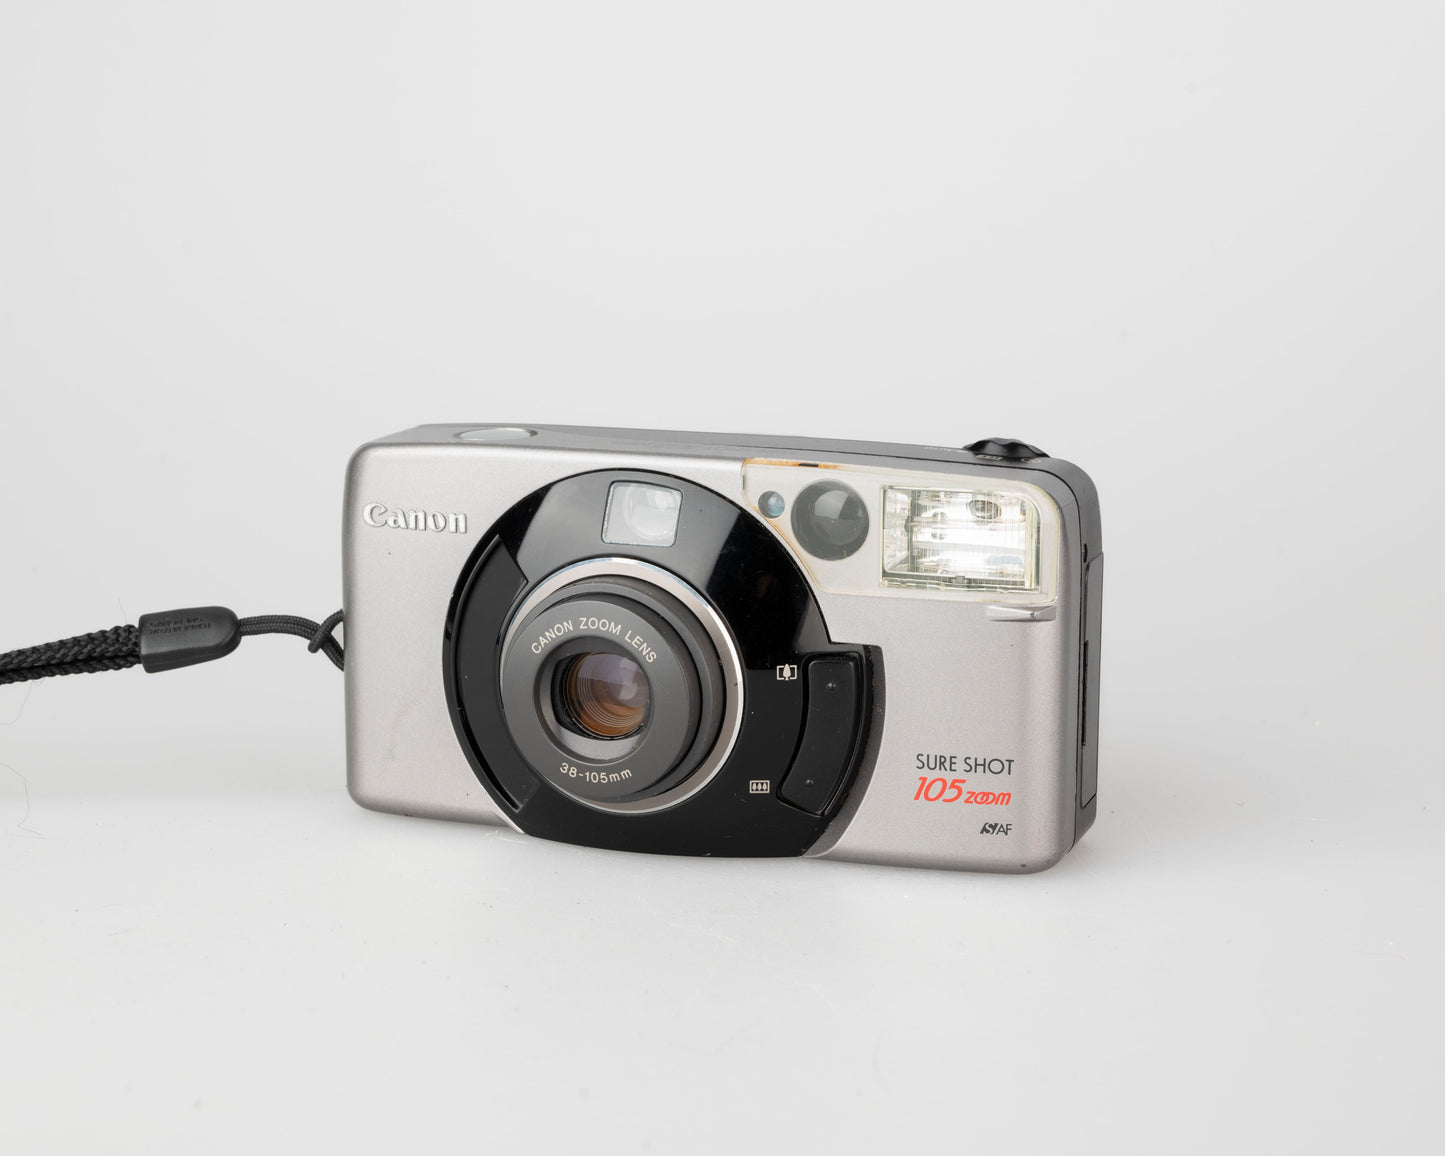 Canon Sure Shot 105 Zoom 35mm film camera (serial 0900585)